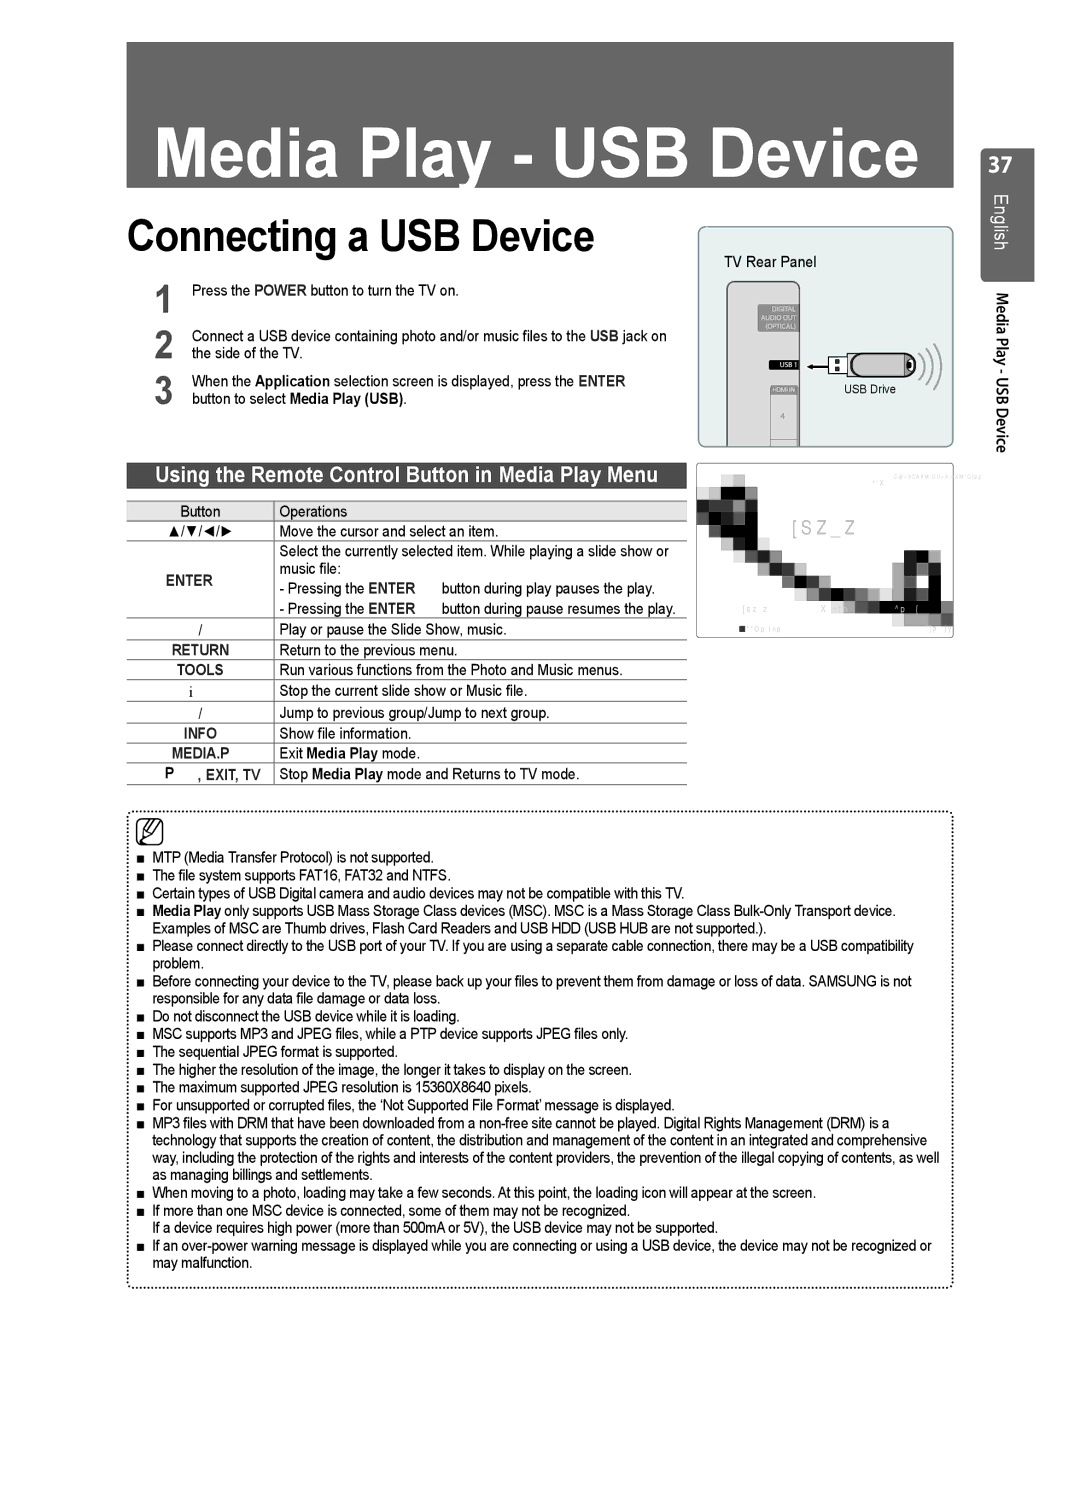 Samsung UE37B6000VWXXH, UE37B6000VWXXC Connecting a USB Device, English Media Play USB Device, ∂/∑, Exit Media Play mode 